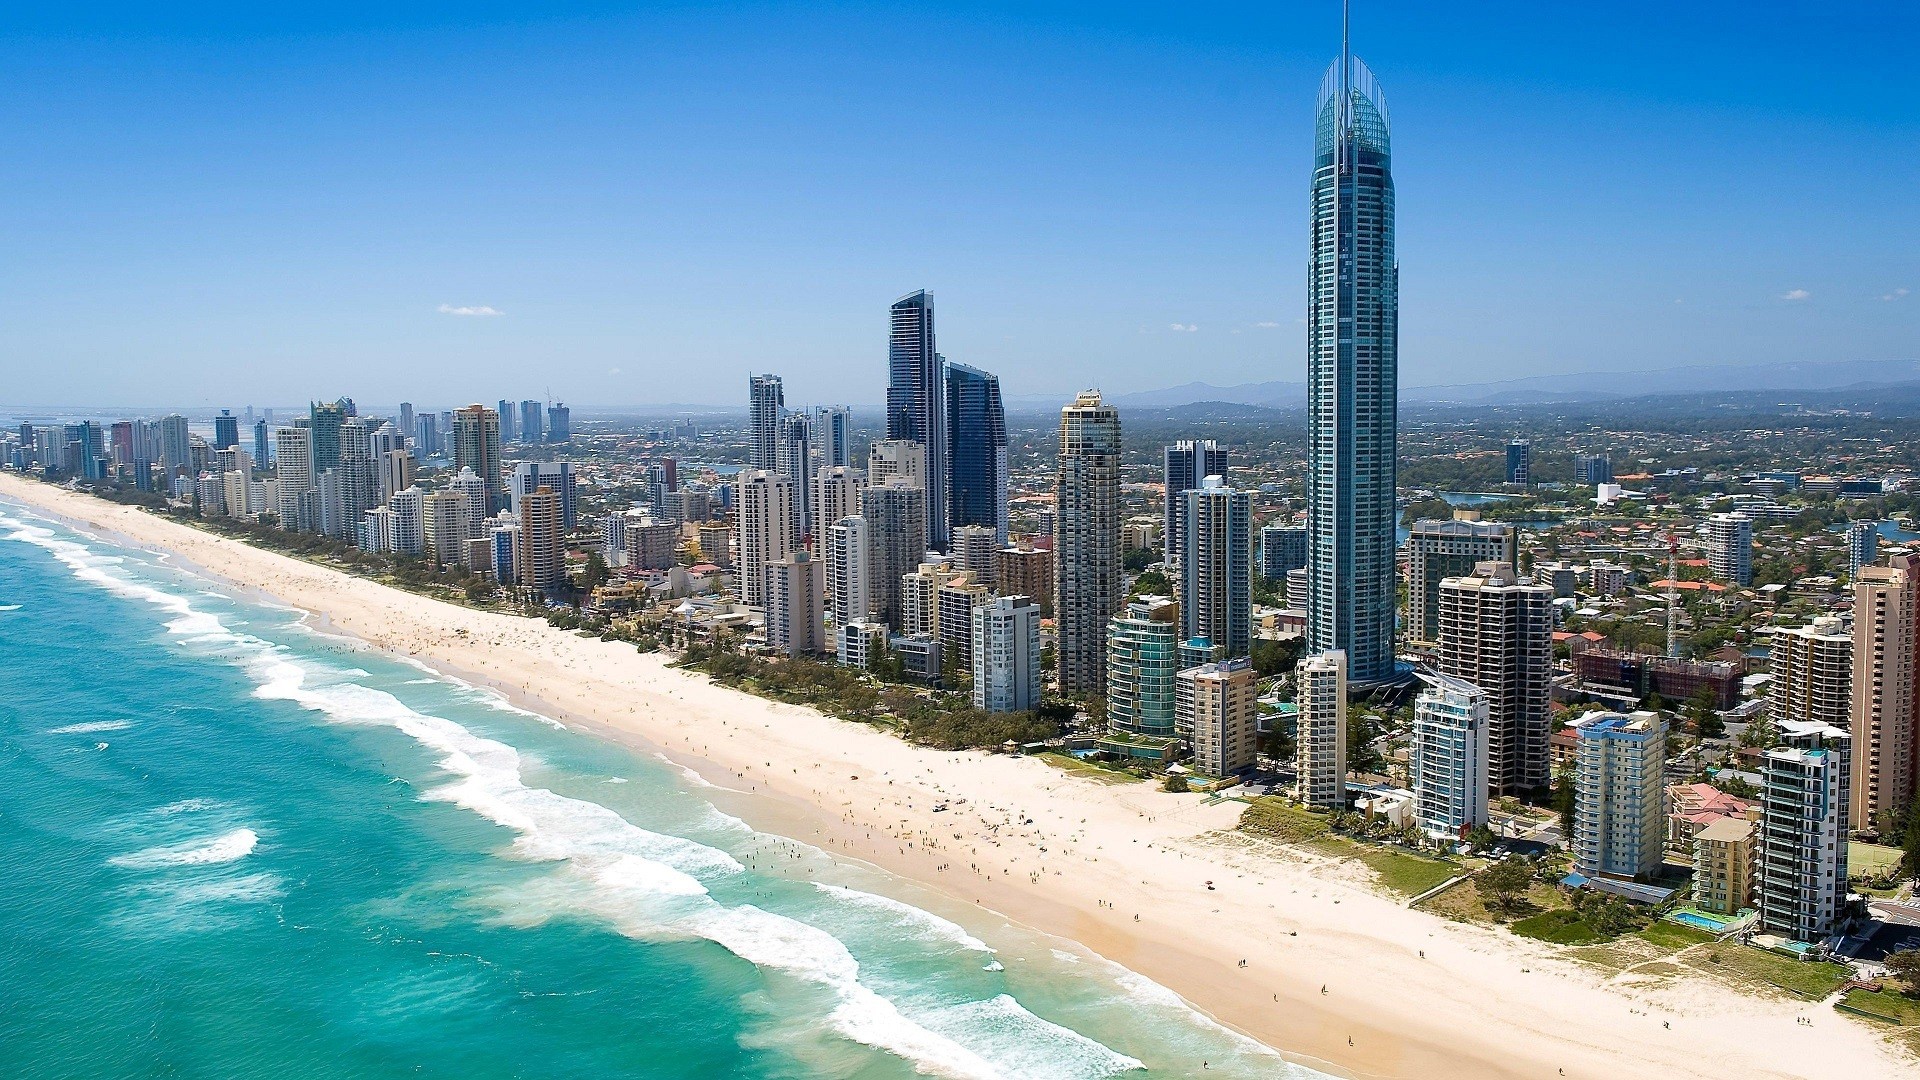 Gold Coast, Surfers Paradise, Queensland, Australia, Beach, City, Cityscape, Skyscraper ...